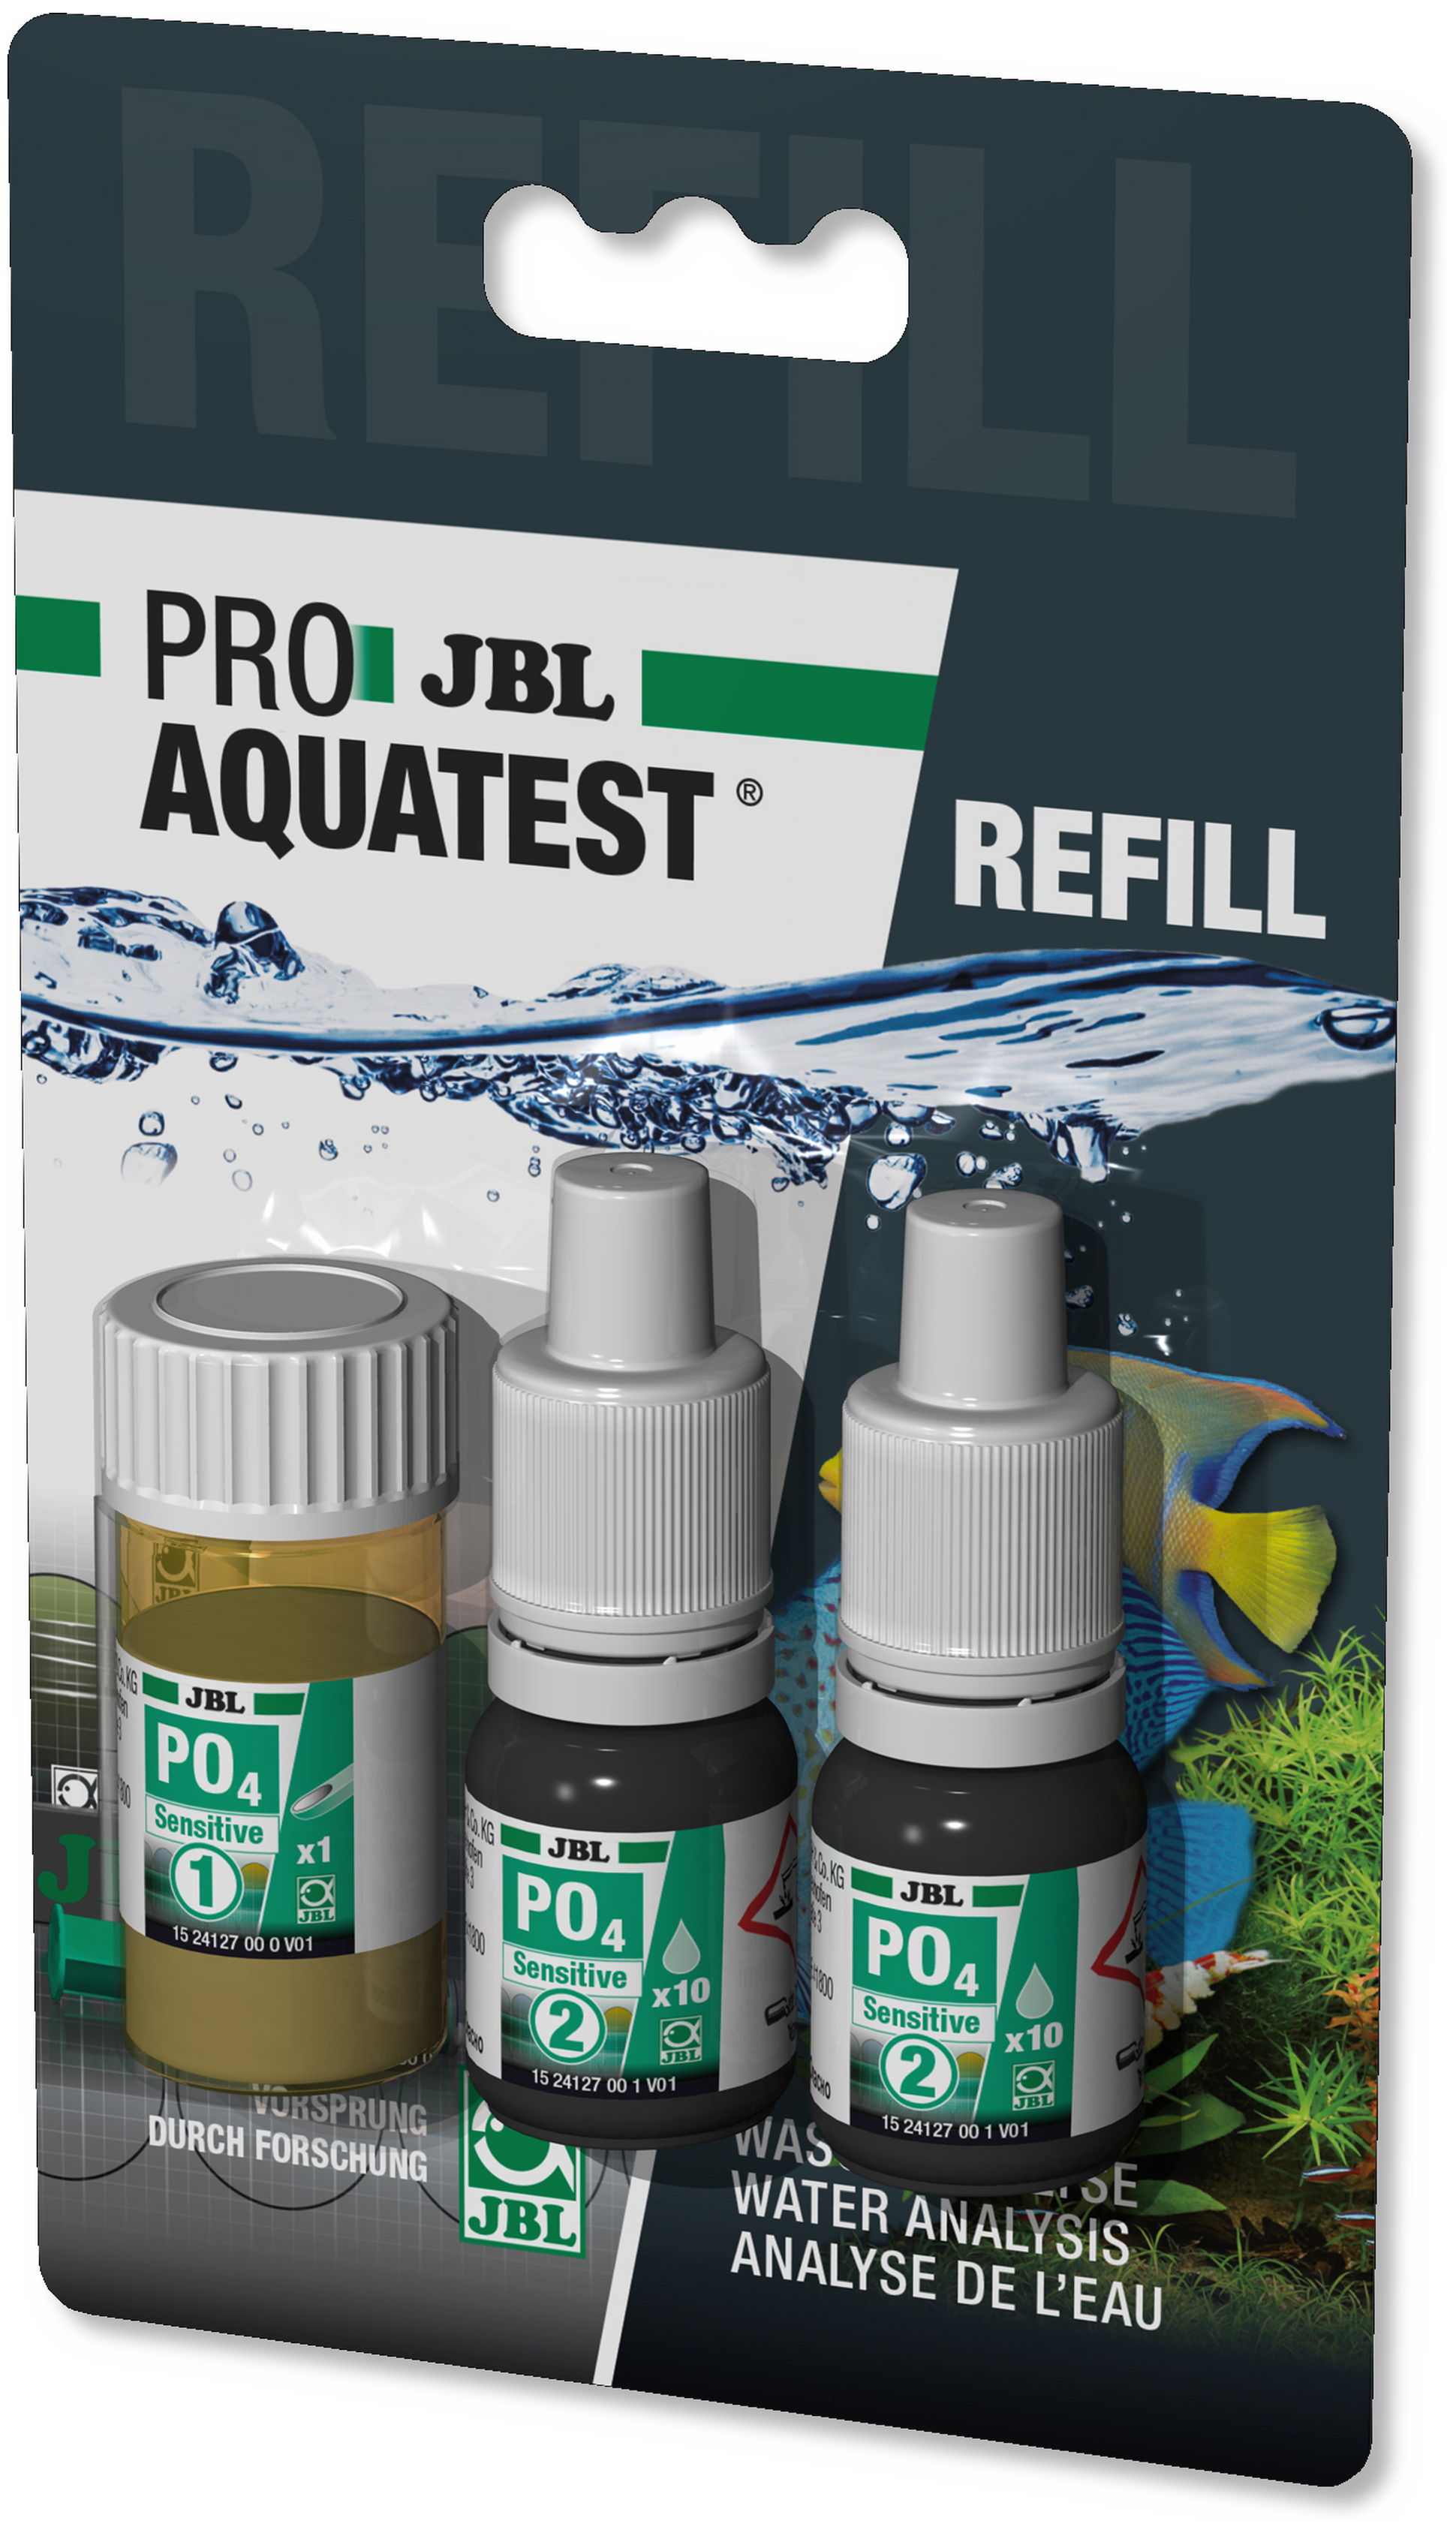 JBL PROAQUATEST PO4 Phosphat Sensitive Refill